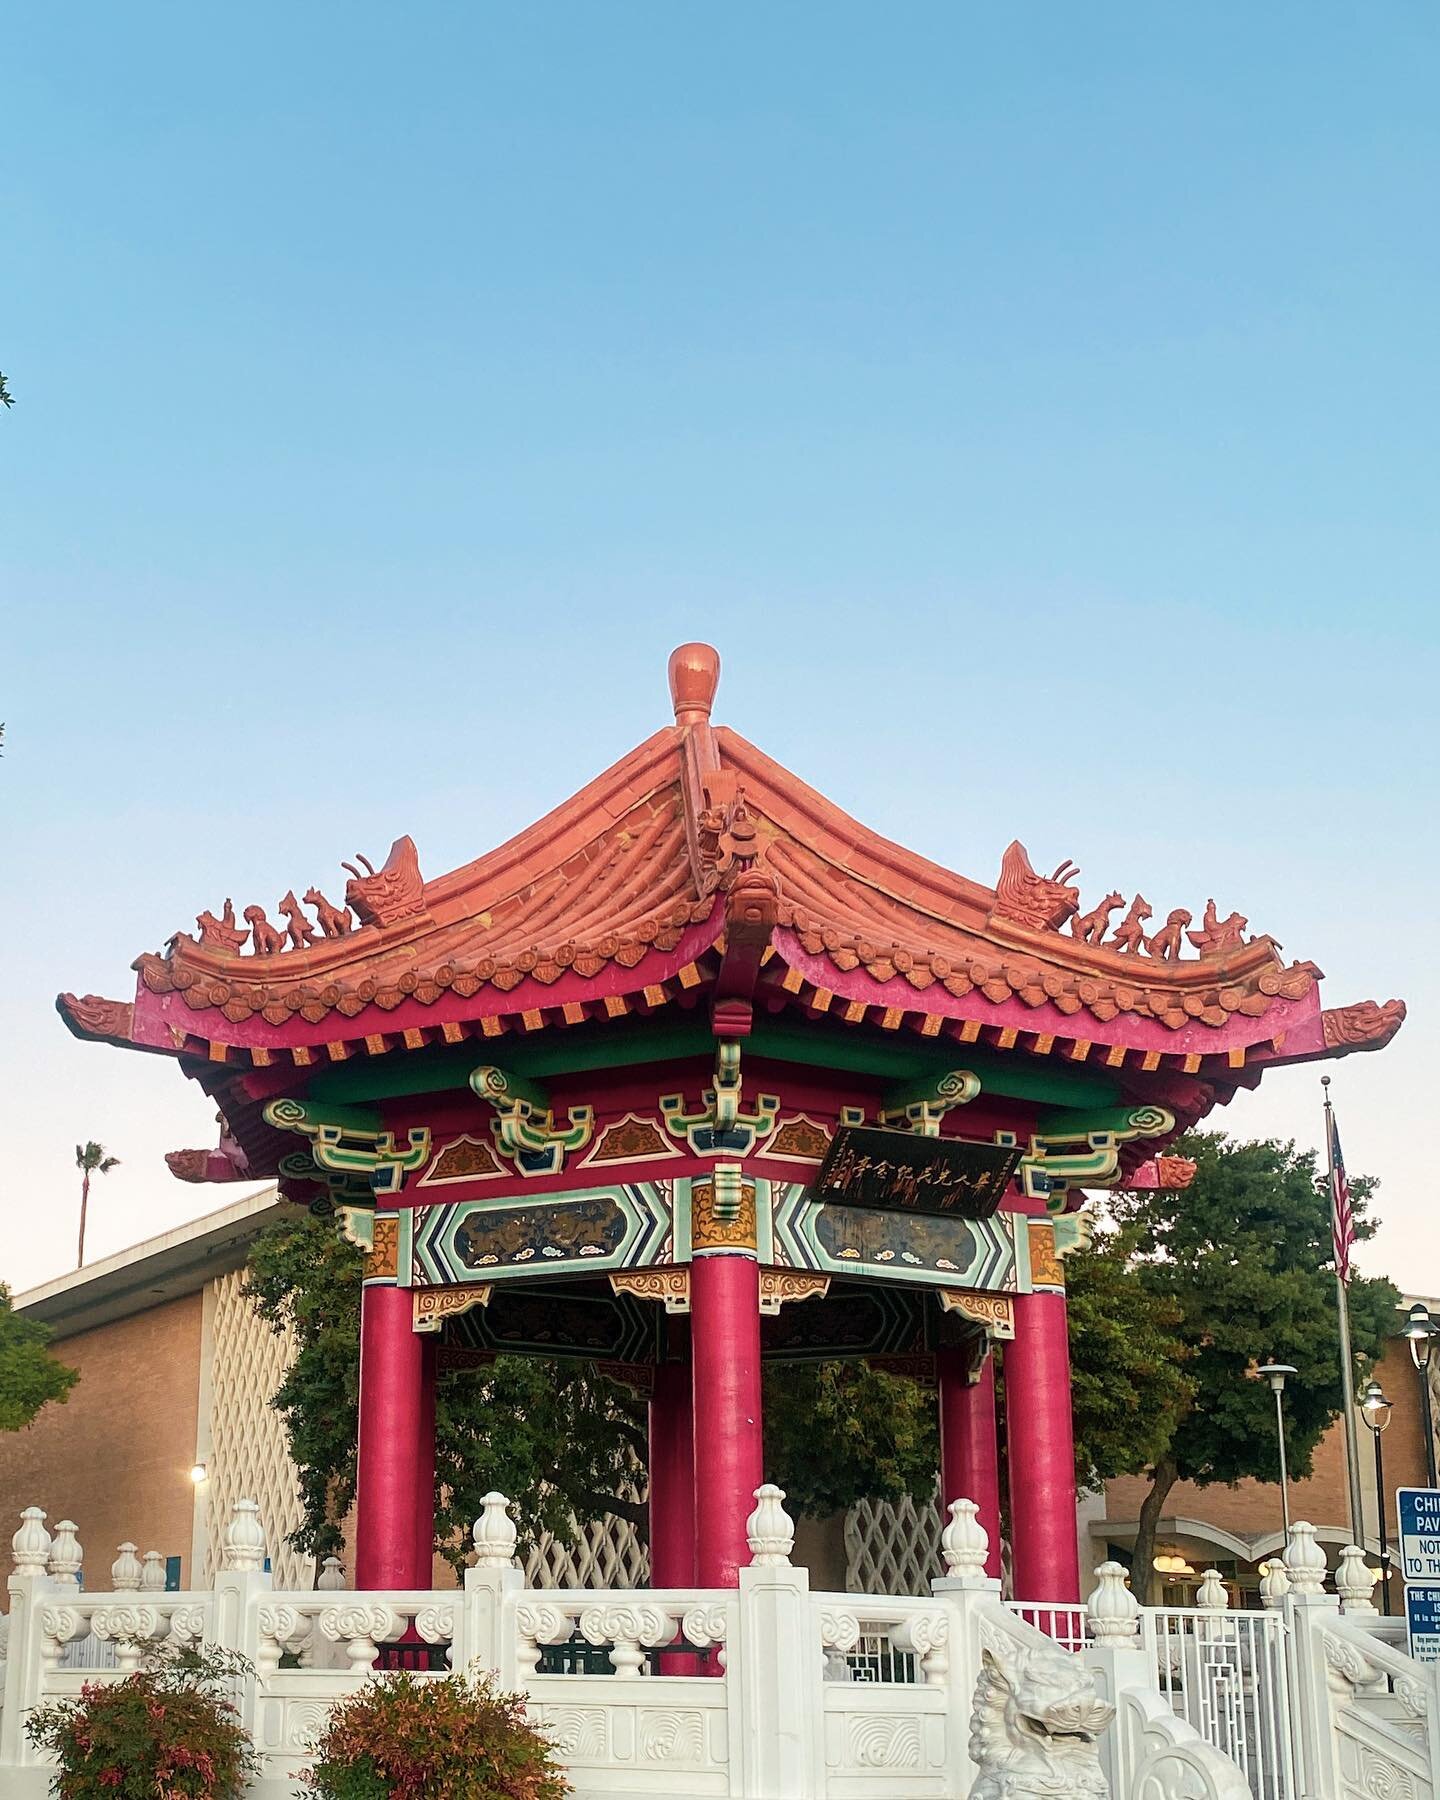 More design inspiration #pagoda #tree #sundial